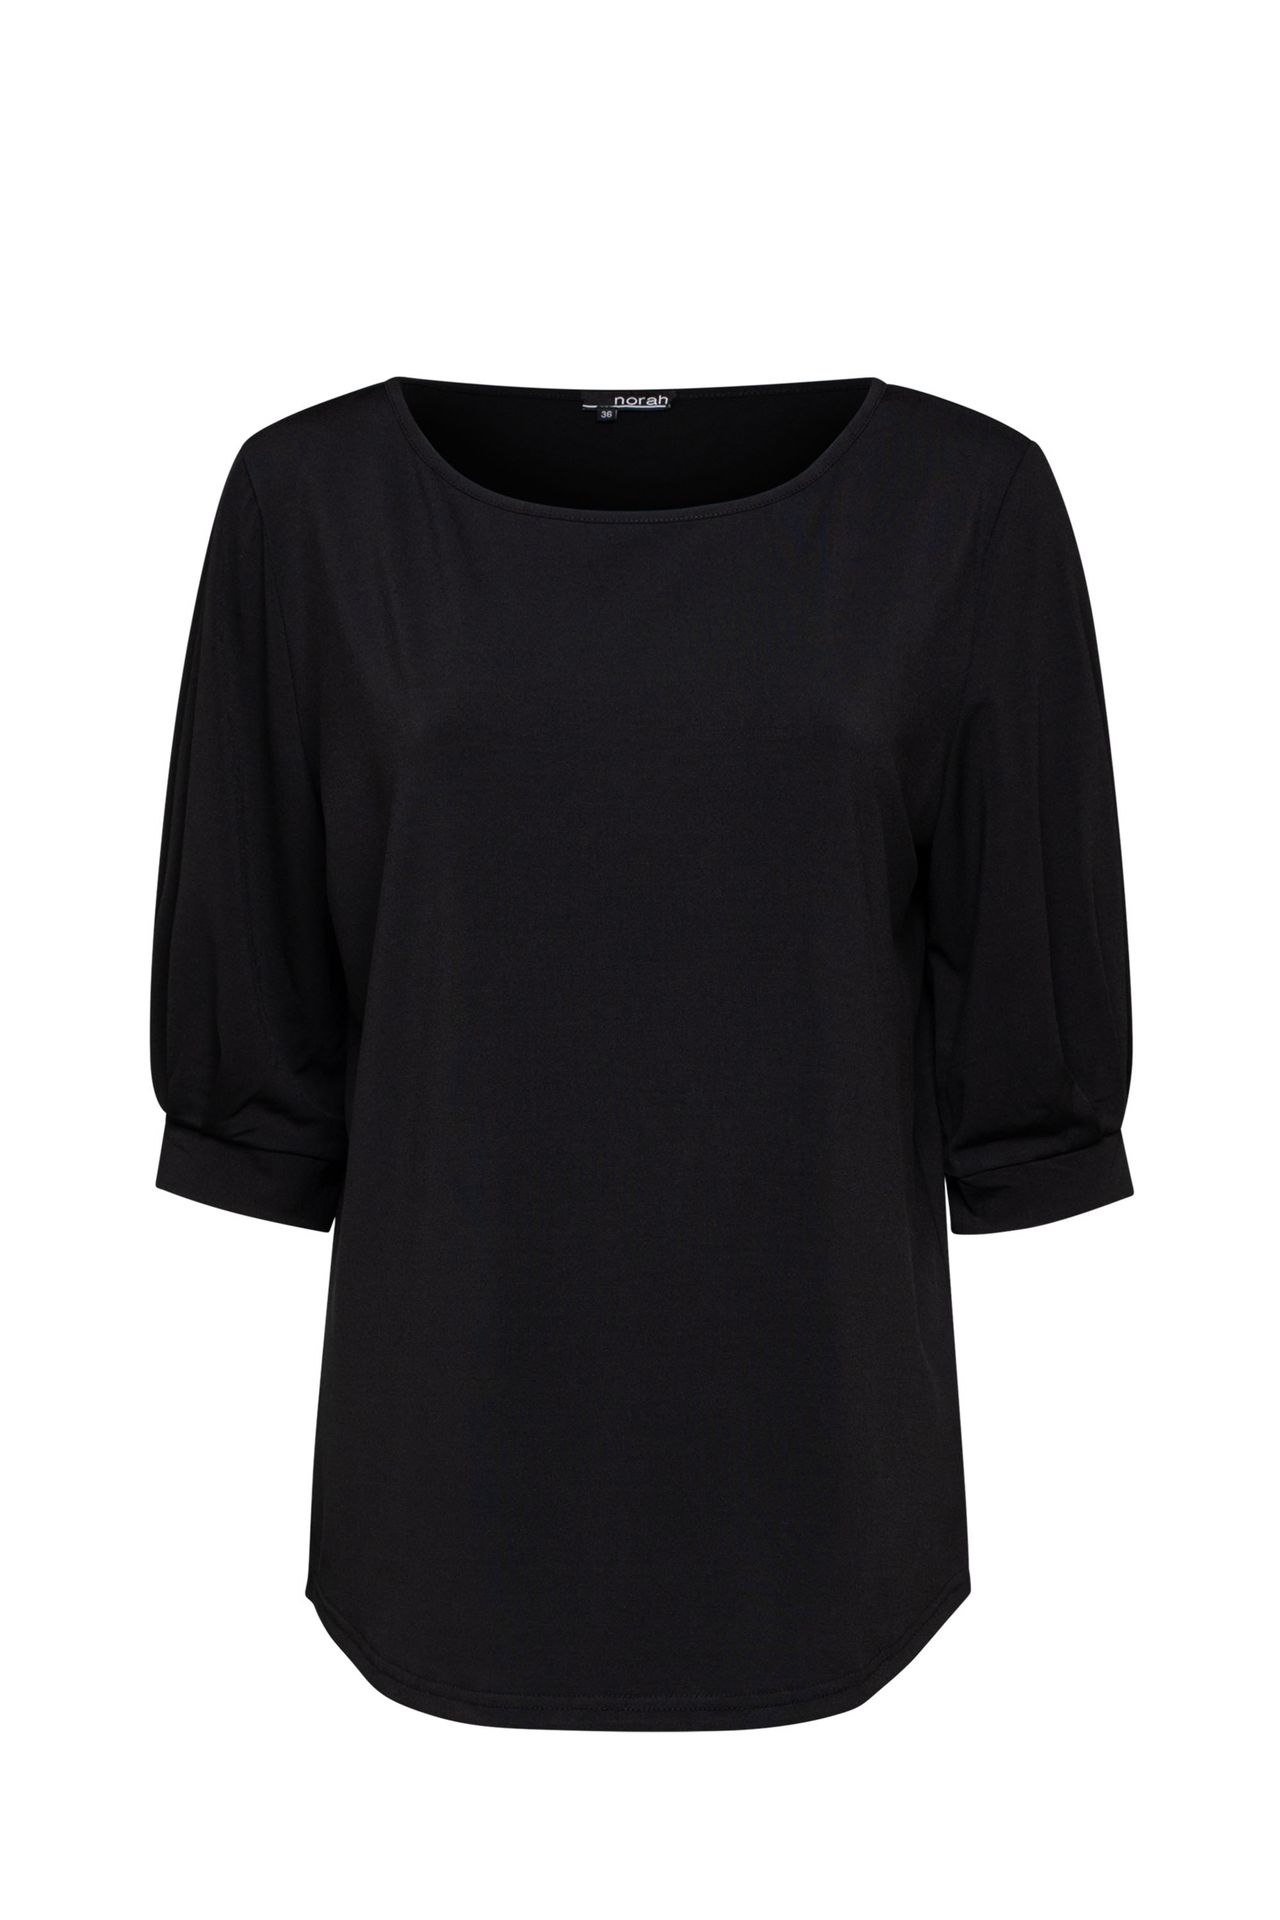 Norah Shirt zwart black 210123-001